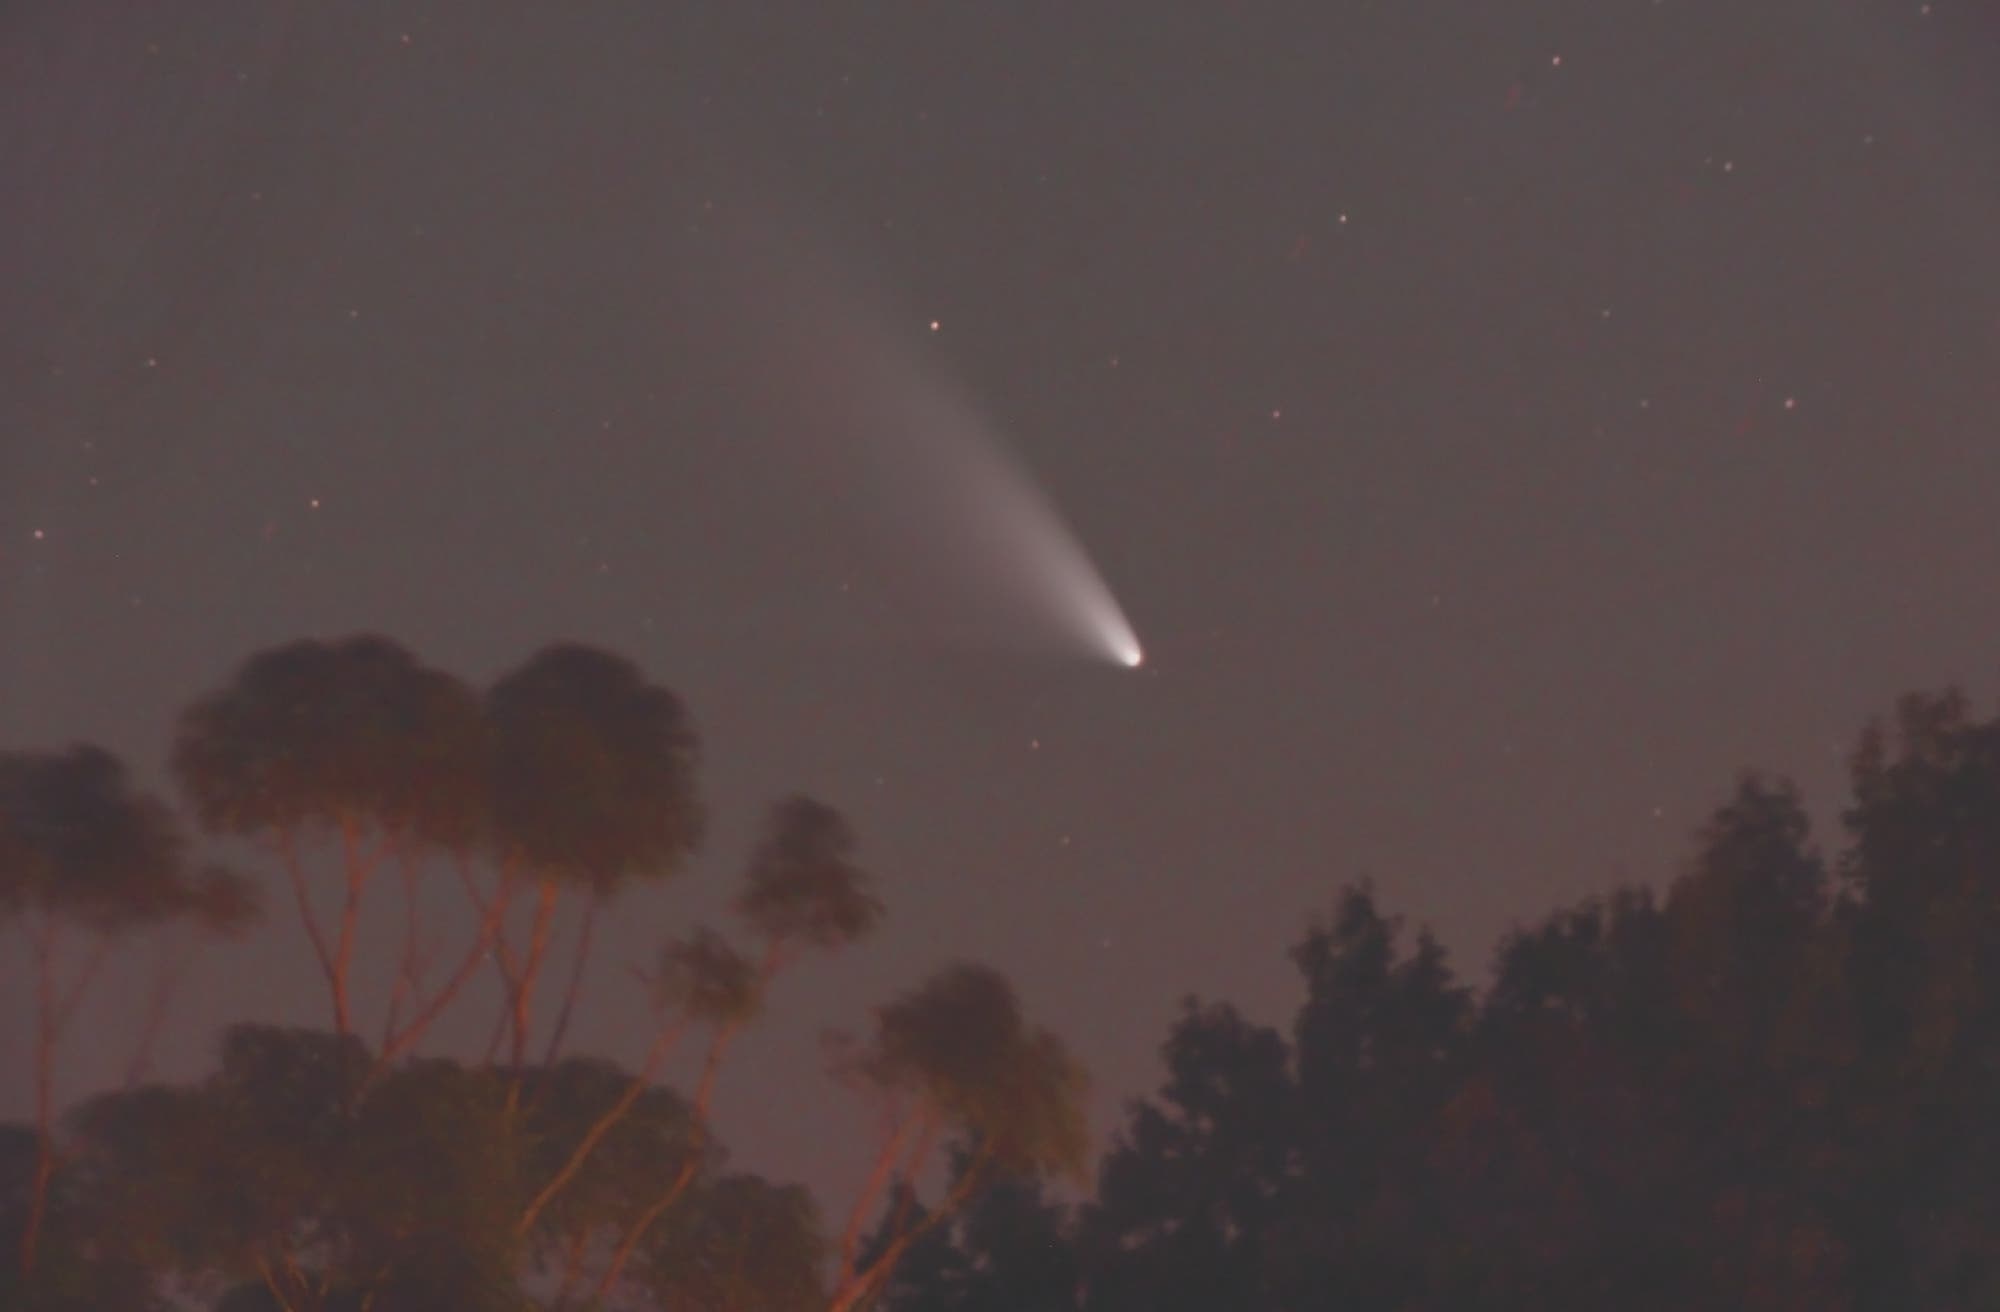 Komet Panstarrs am Horizont